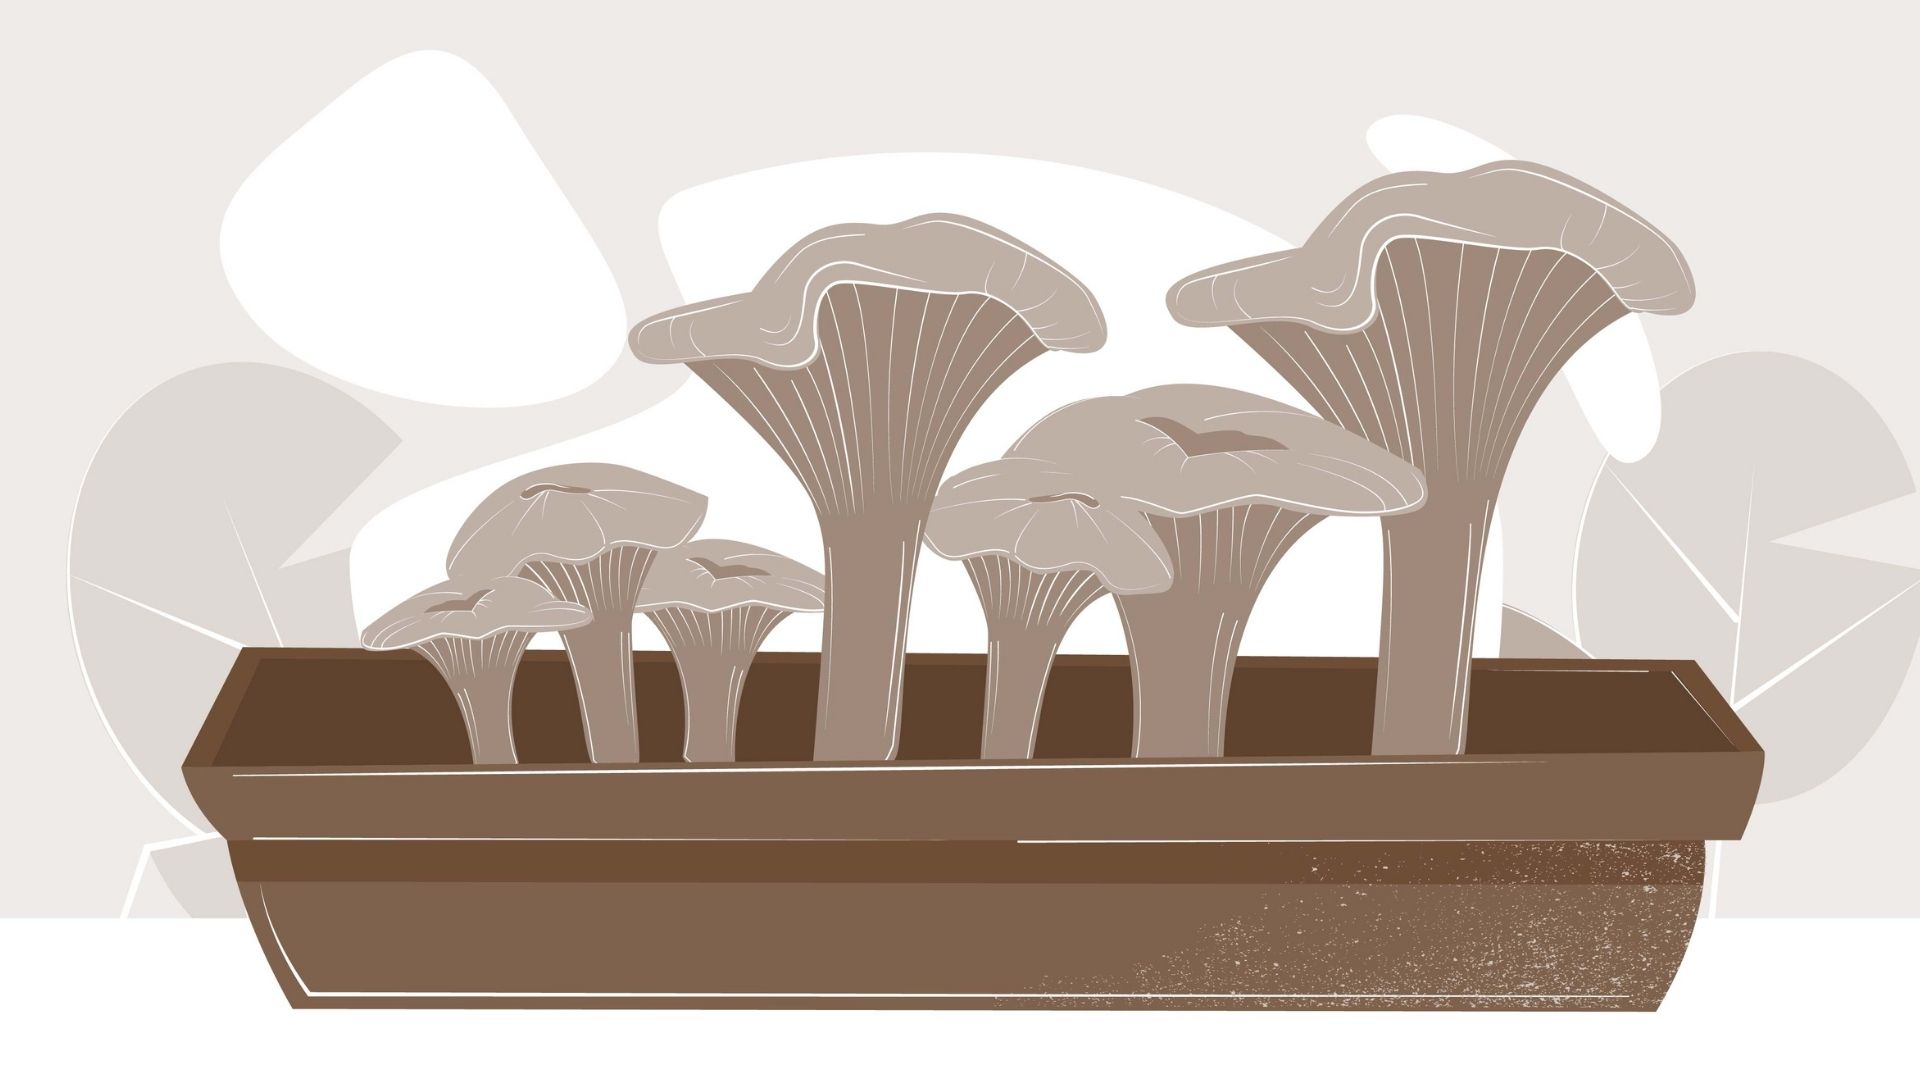 Mushroom growing - 2D Animation